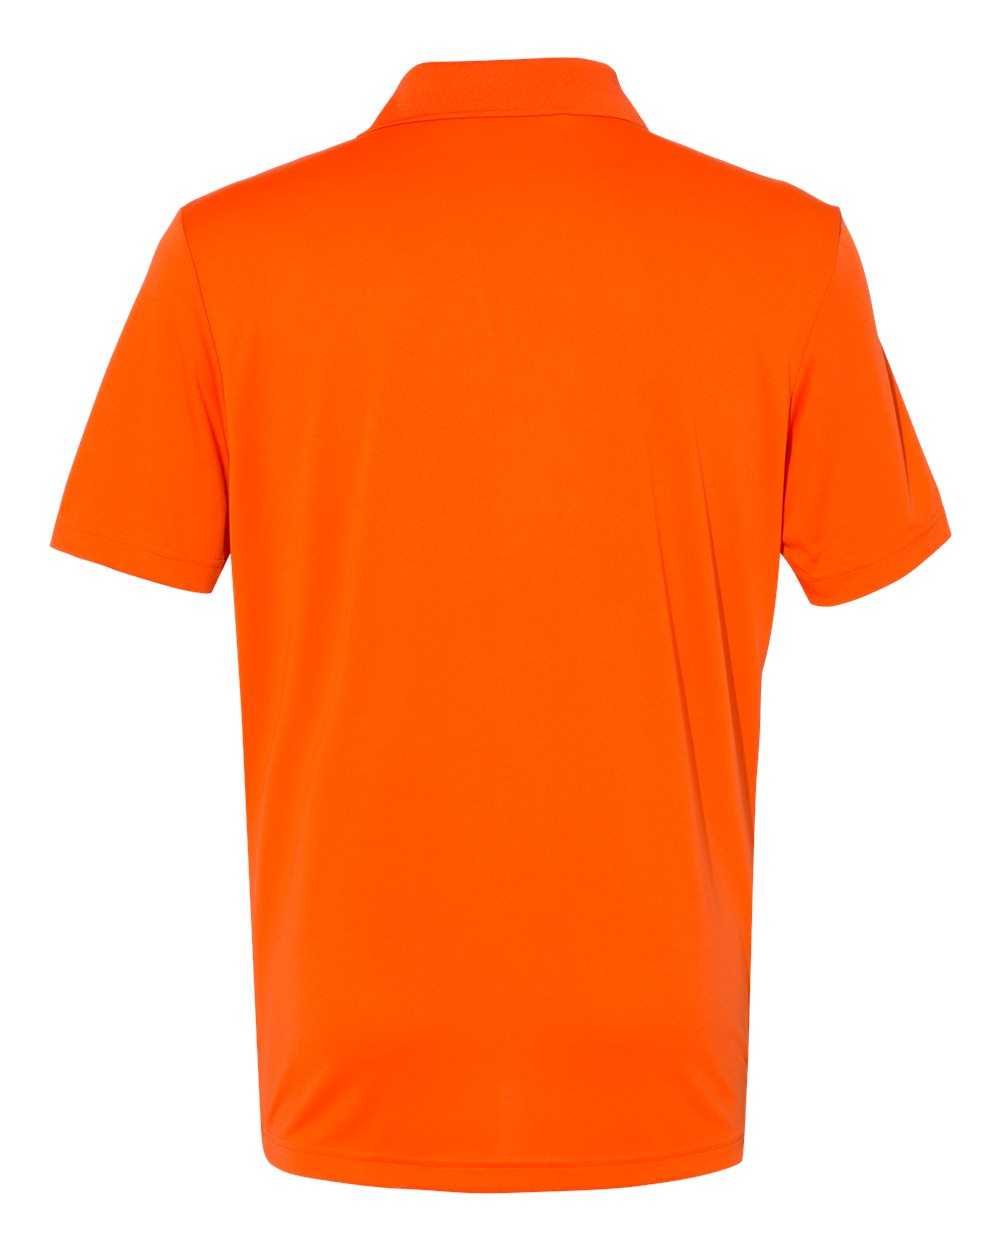 Adidas A230 Performance Sport Shirt - Orange - HIT a Double